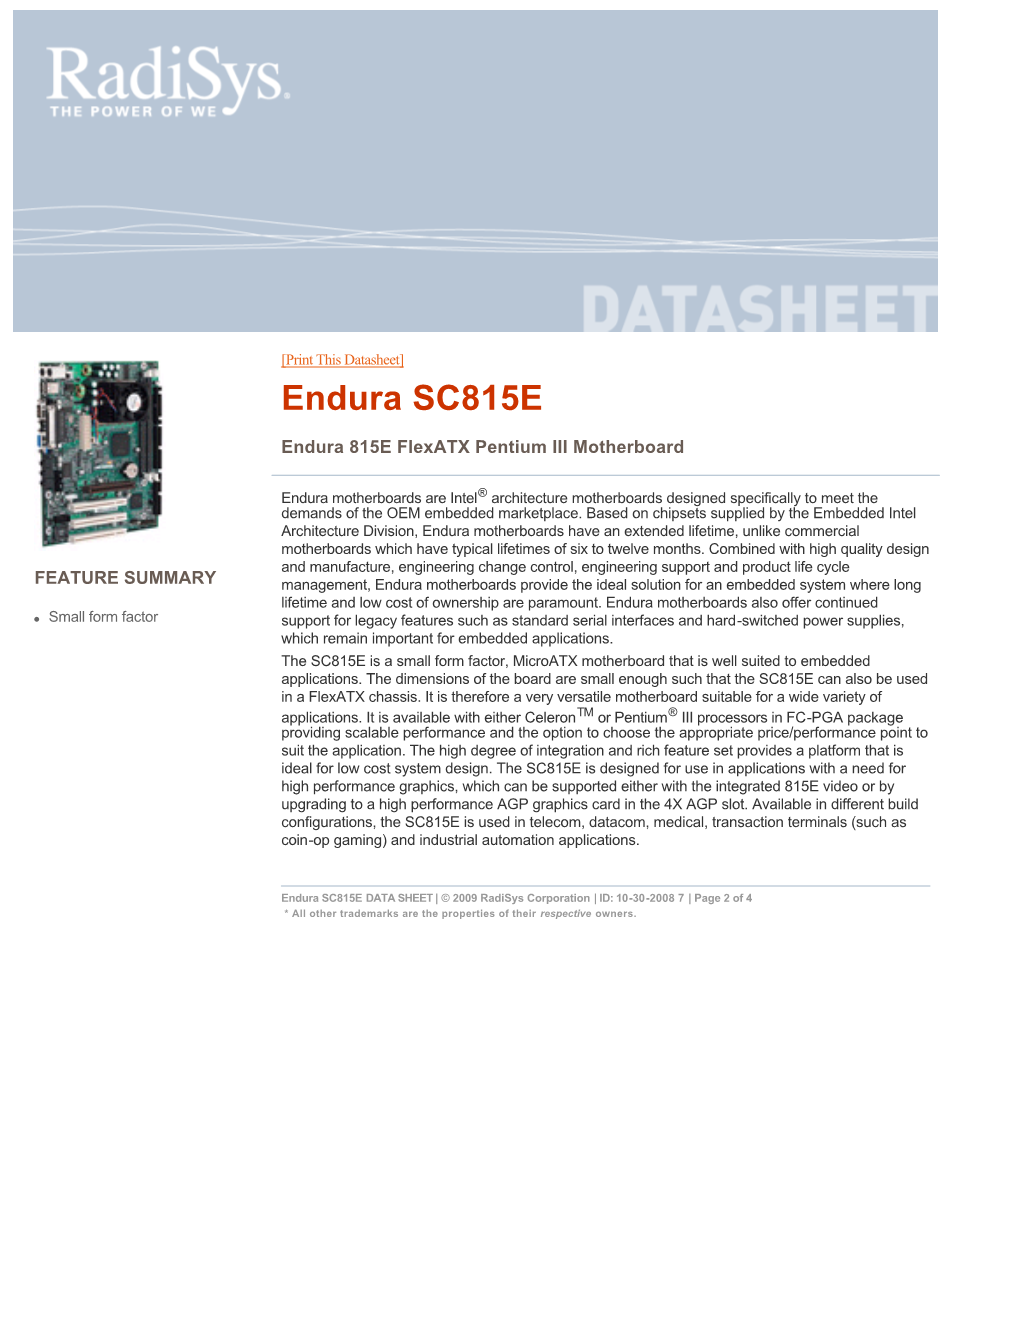 Endura SC815E